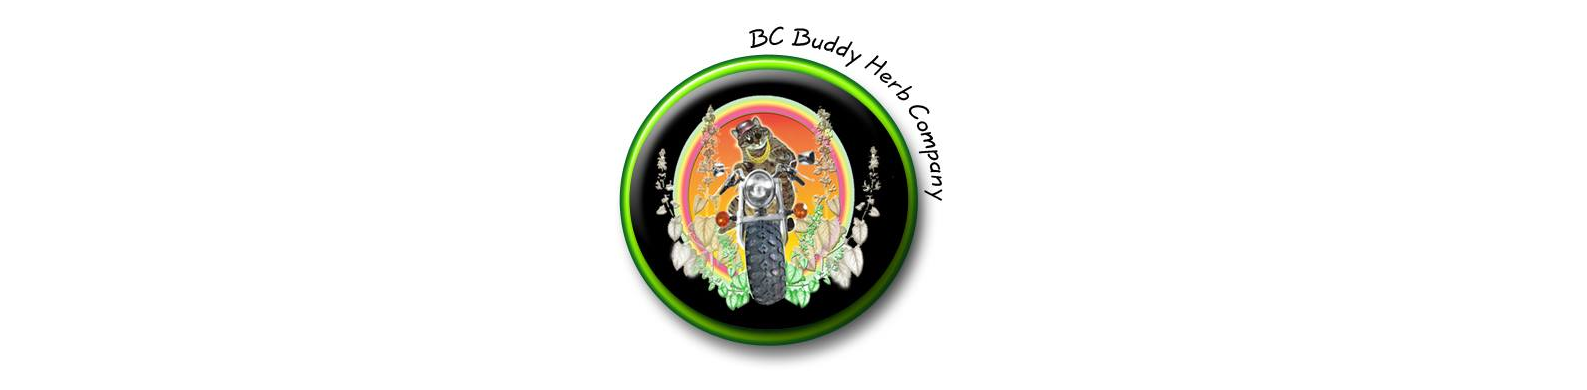 B.C. Buddy